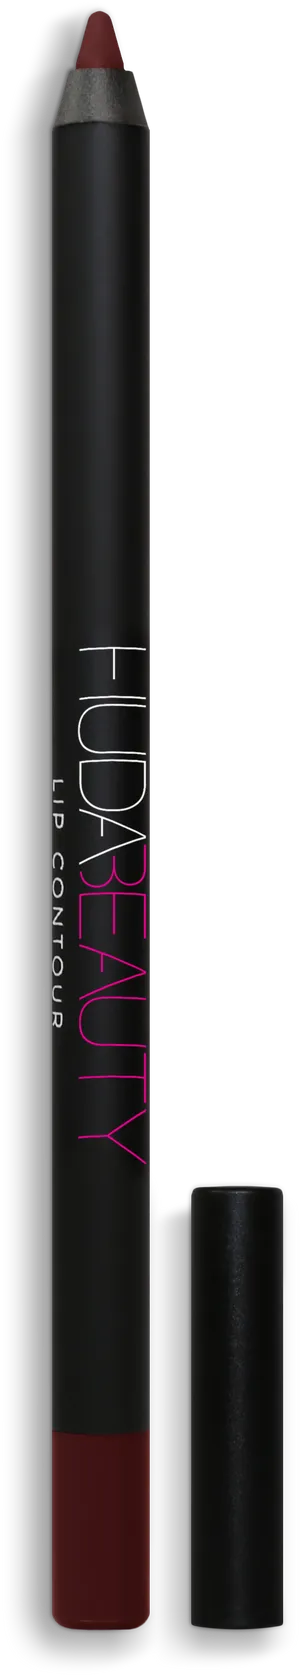 Huda Beauty Lip Contour Pencil PNG image